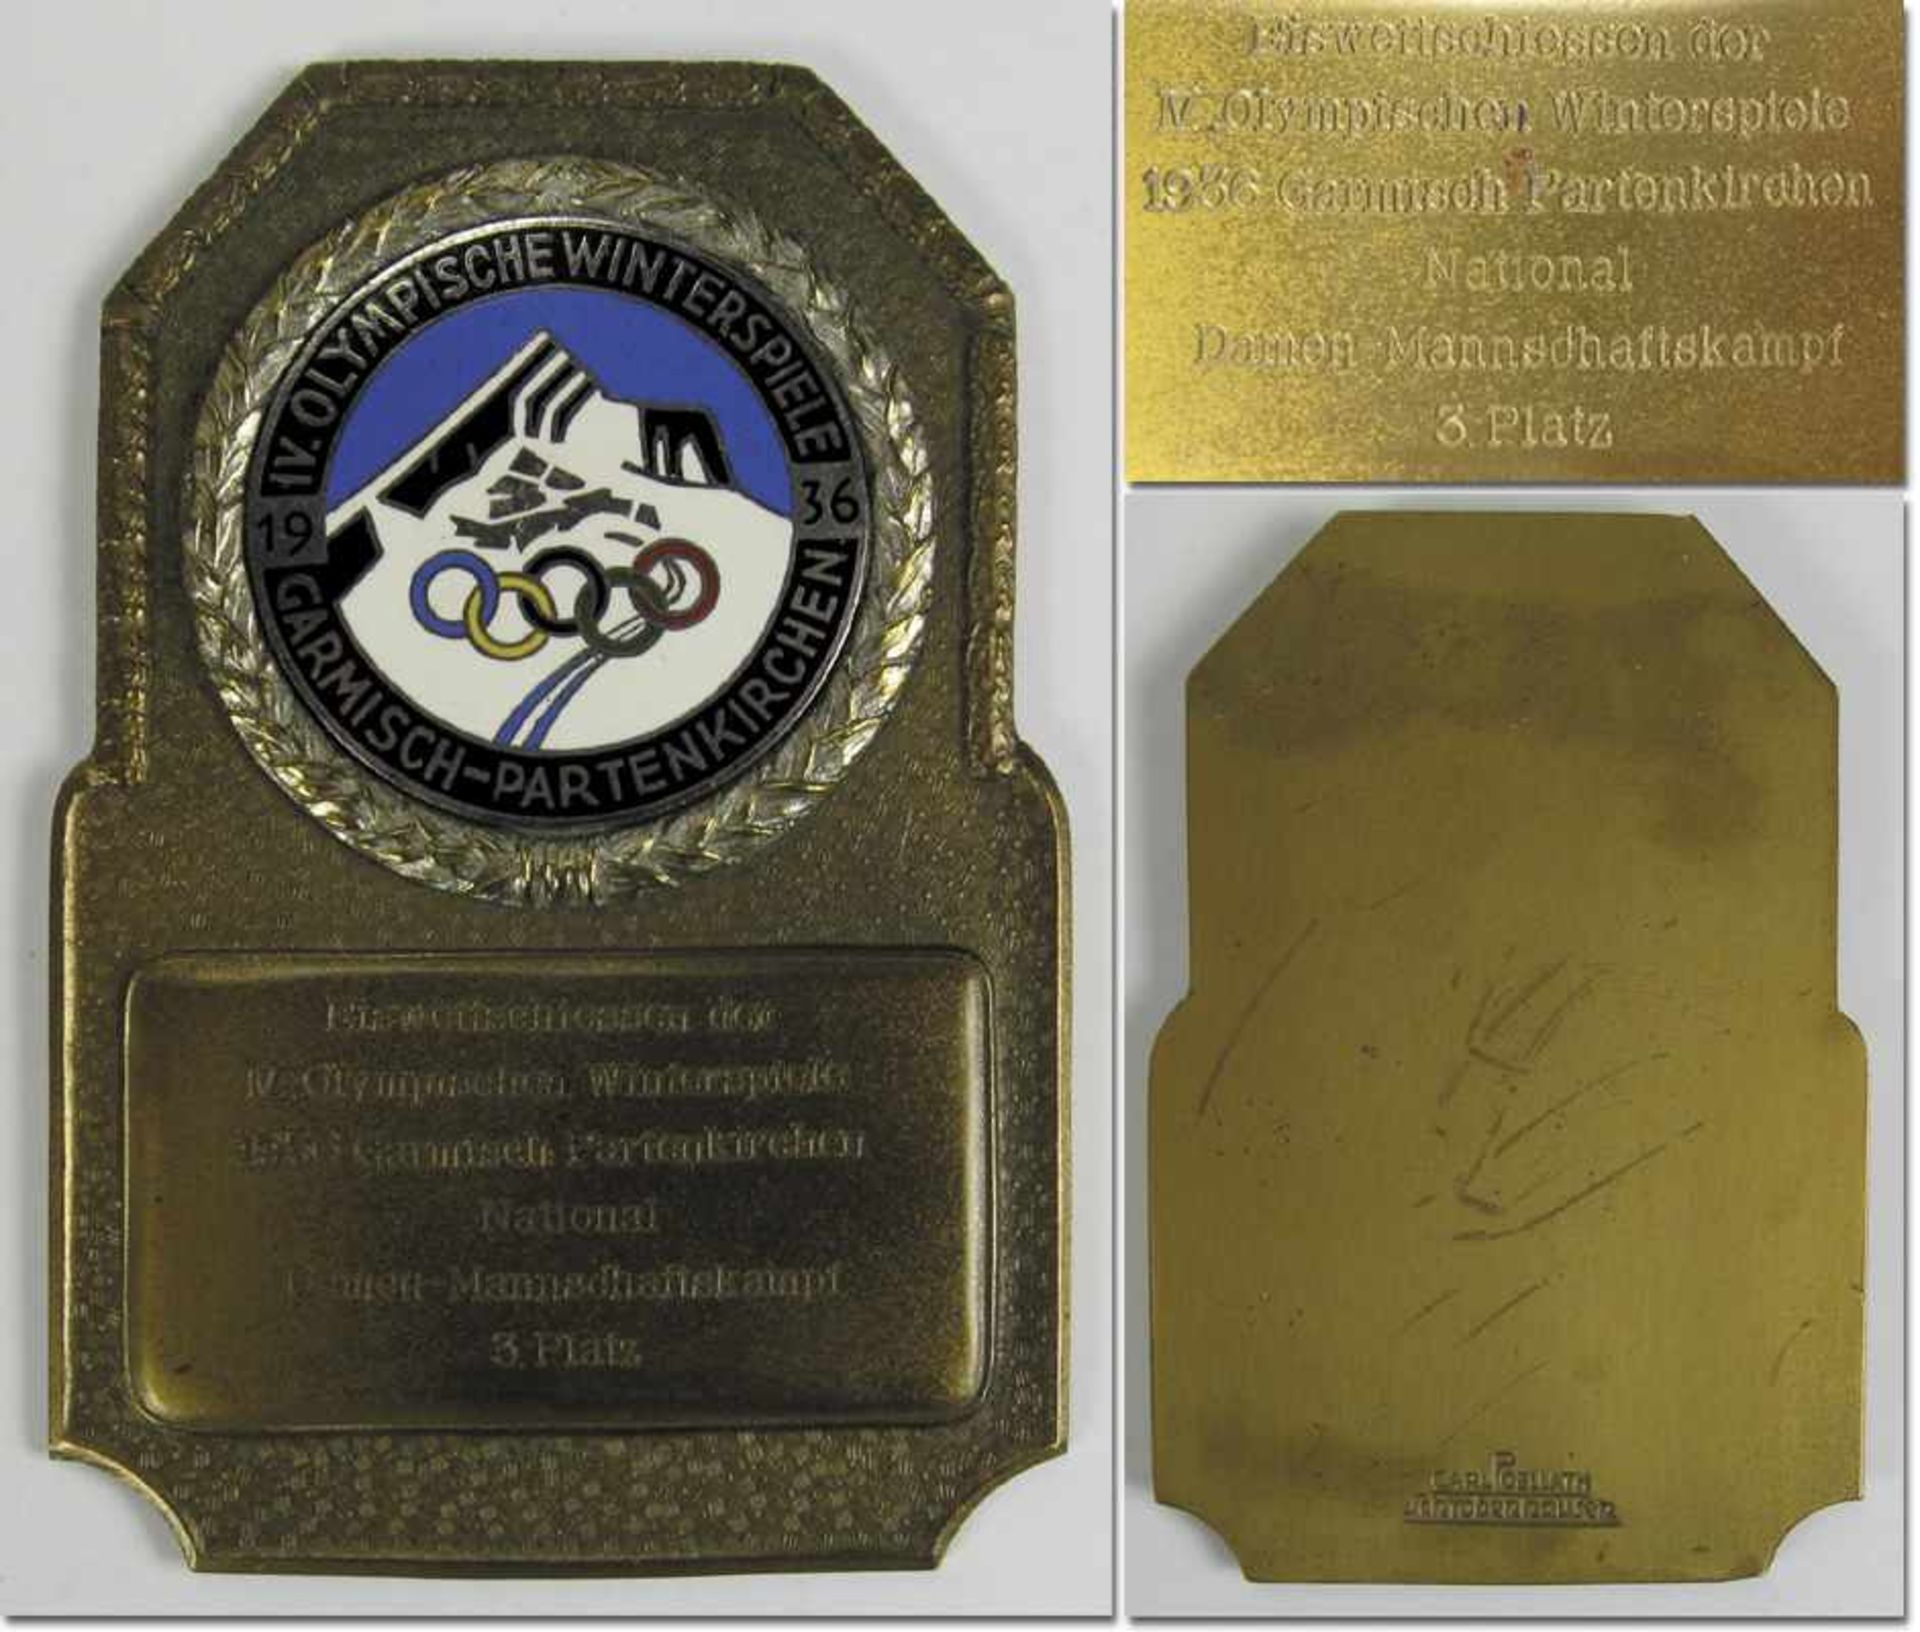 Olympic Winter Games 1936 Winner medal - Original winner medal from the Olympic Winter Games in